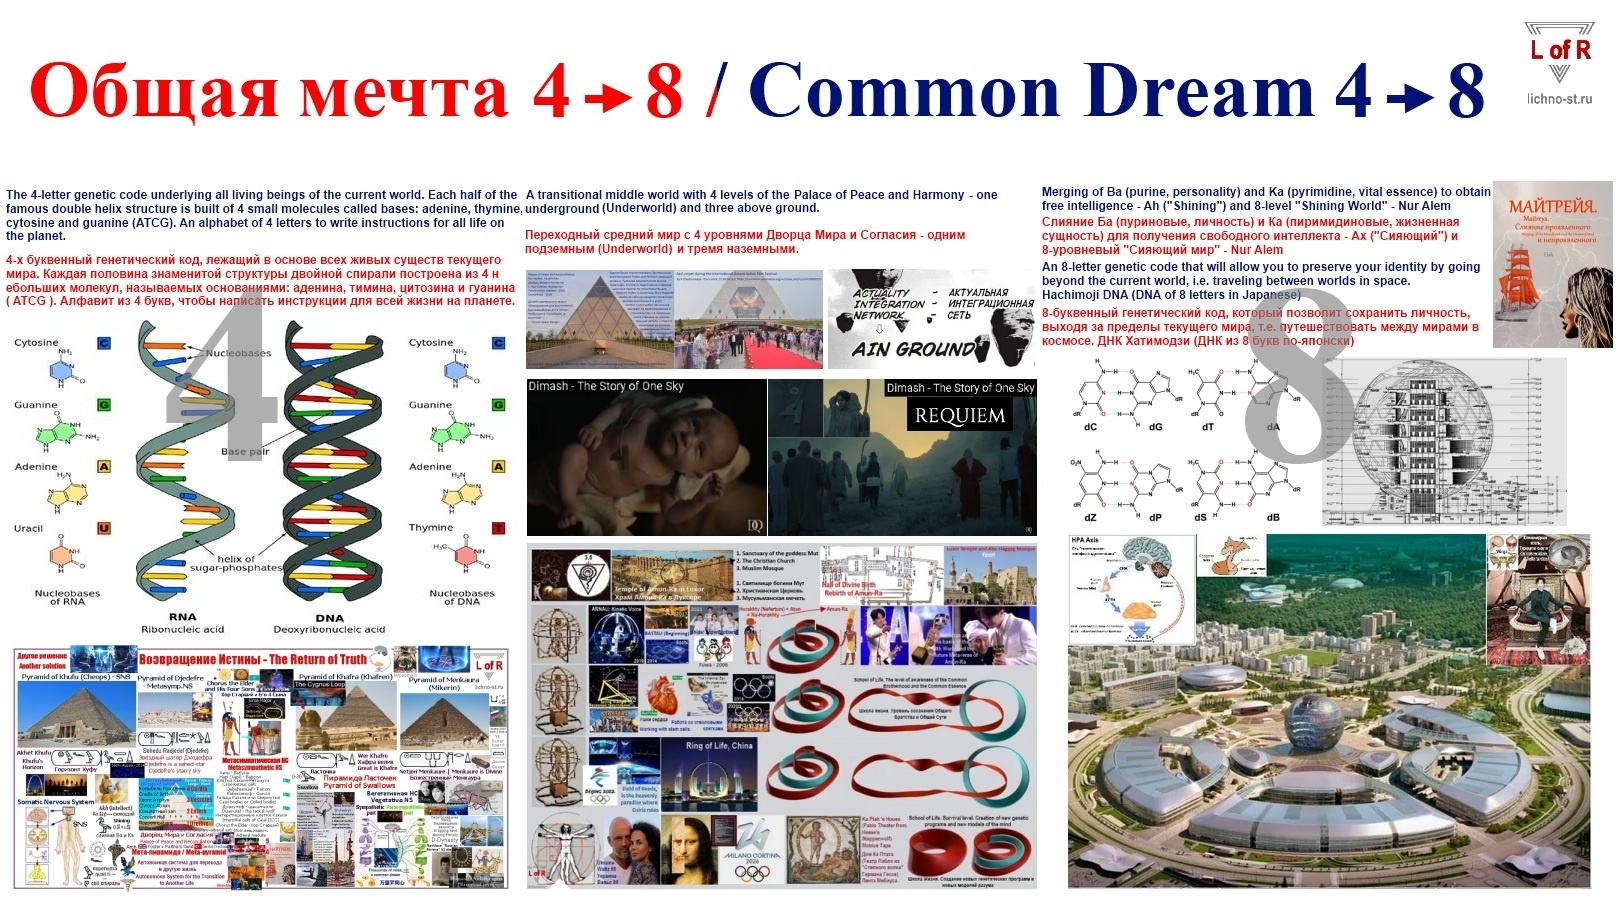 Общая мечта Common Dream 4->8